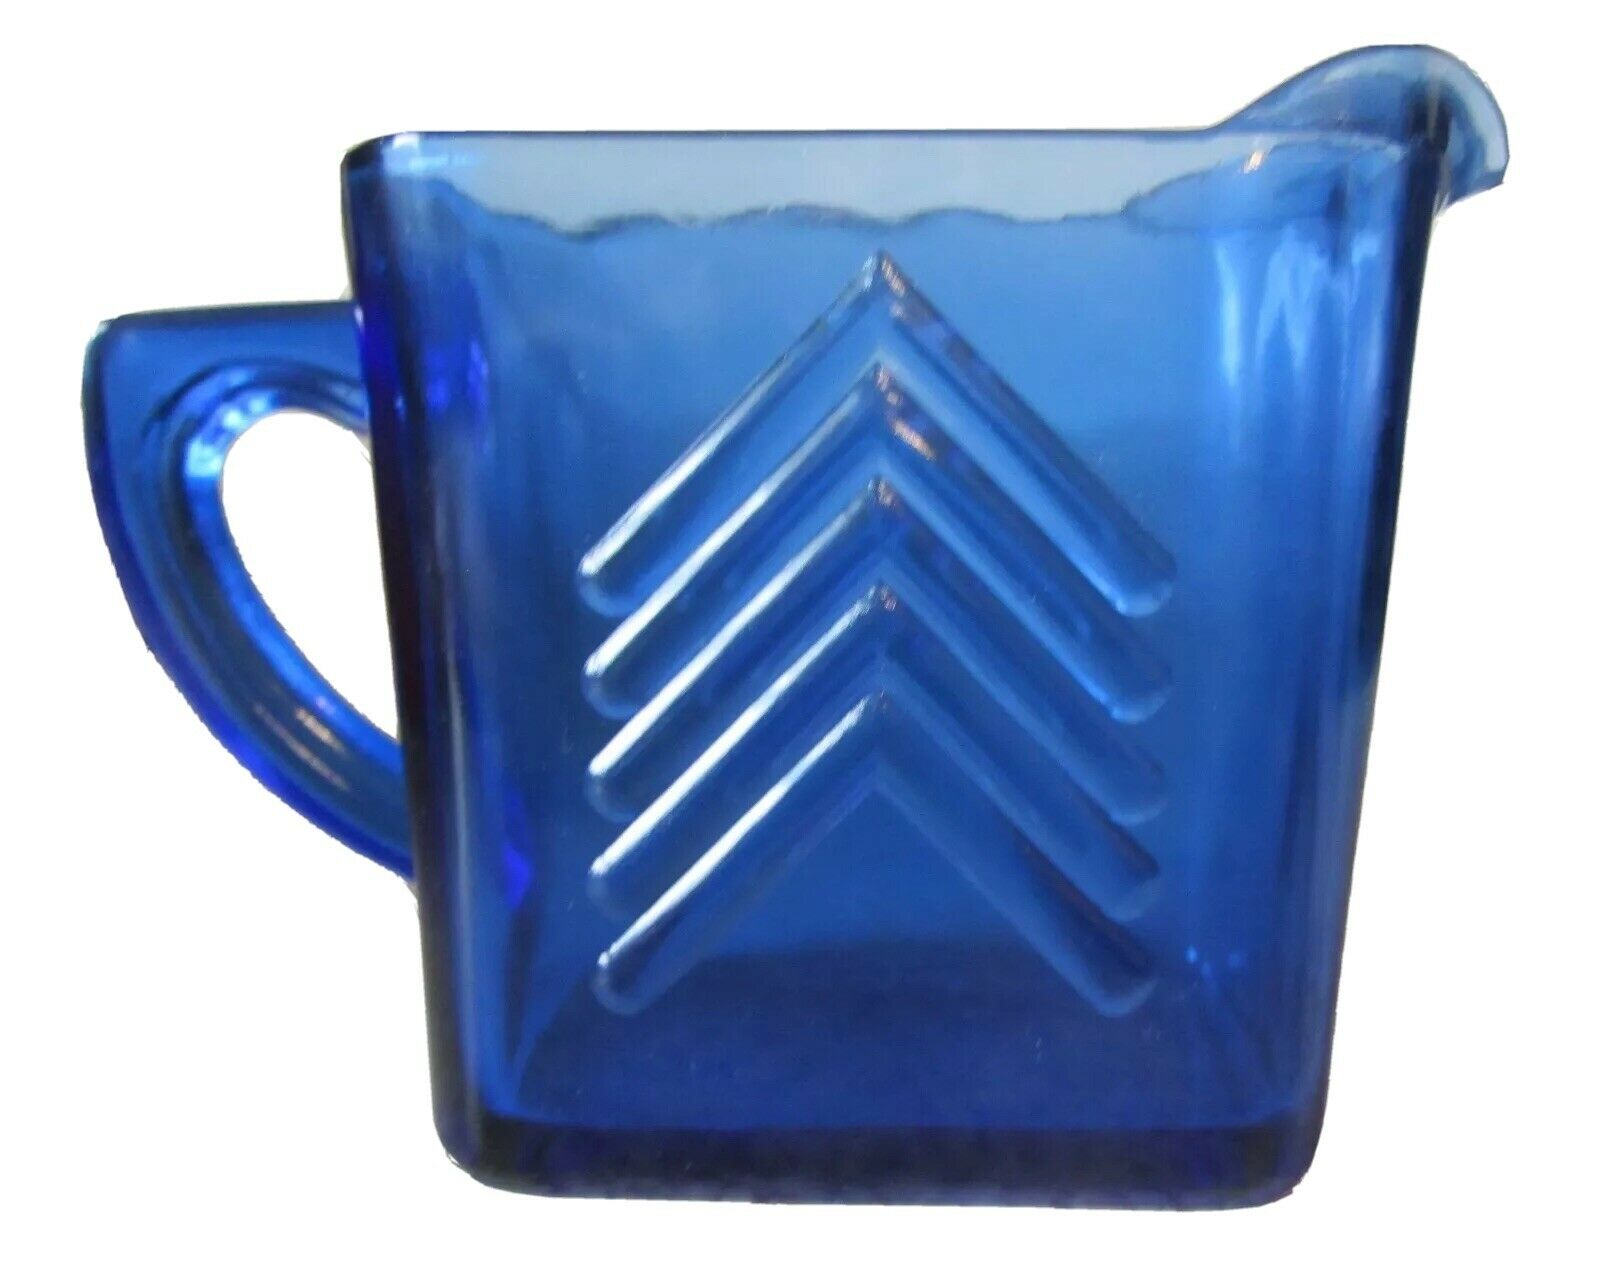 "chevron" Pattern Cobalt Blue Depression Glass 4 1/8" Tall Milk Pitcher